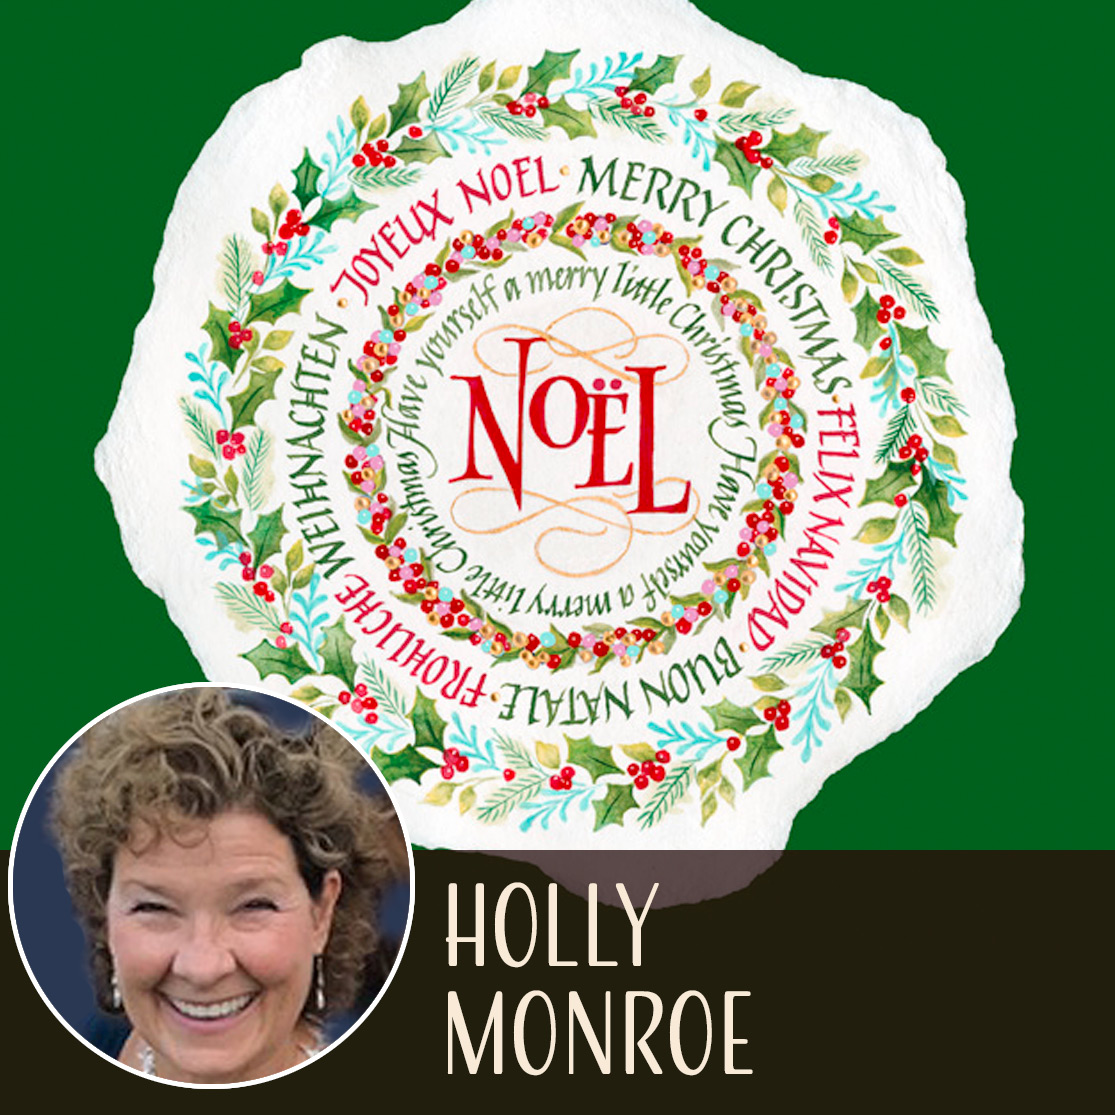 Holly Monroe - Noel Spectacular Circular Calligraphy